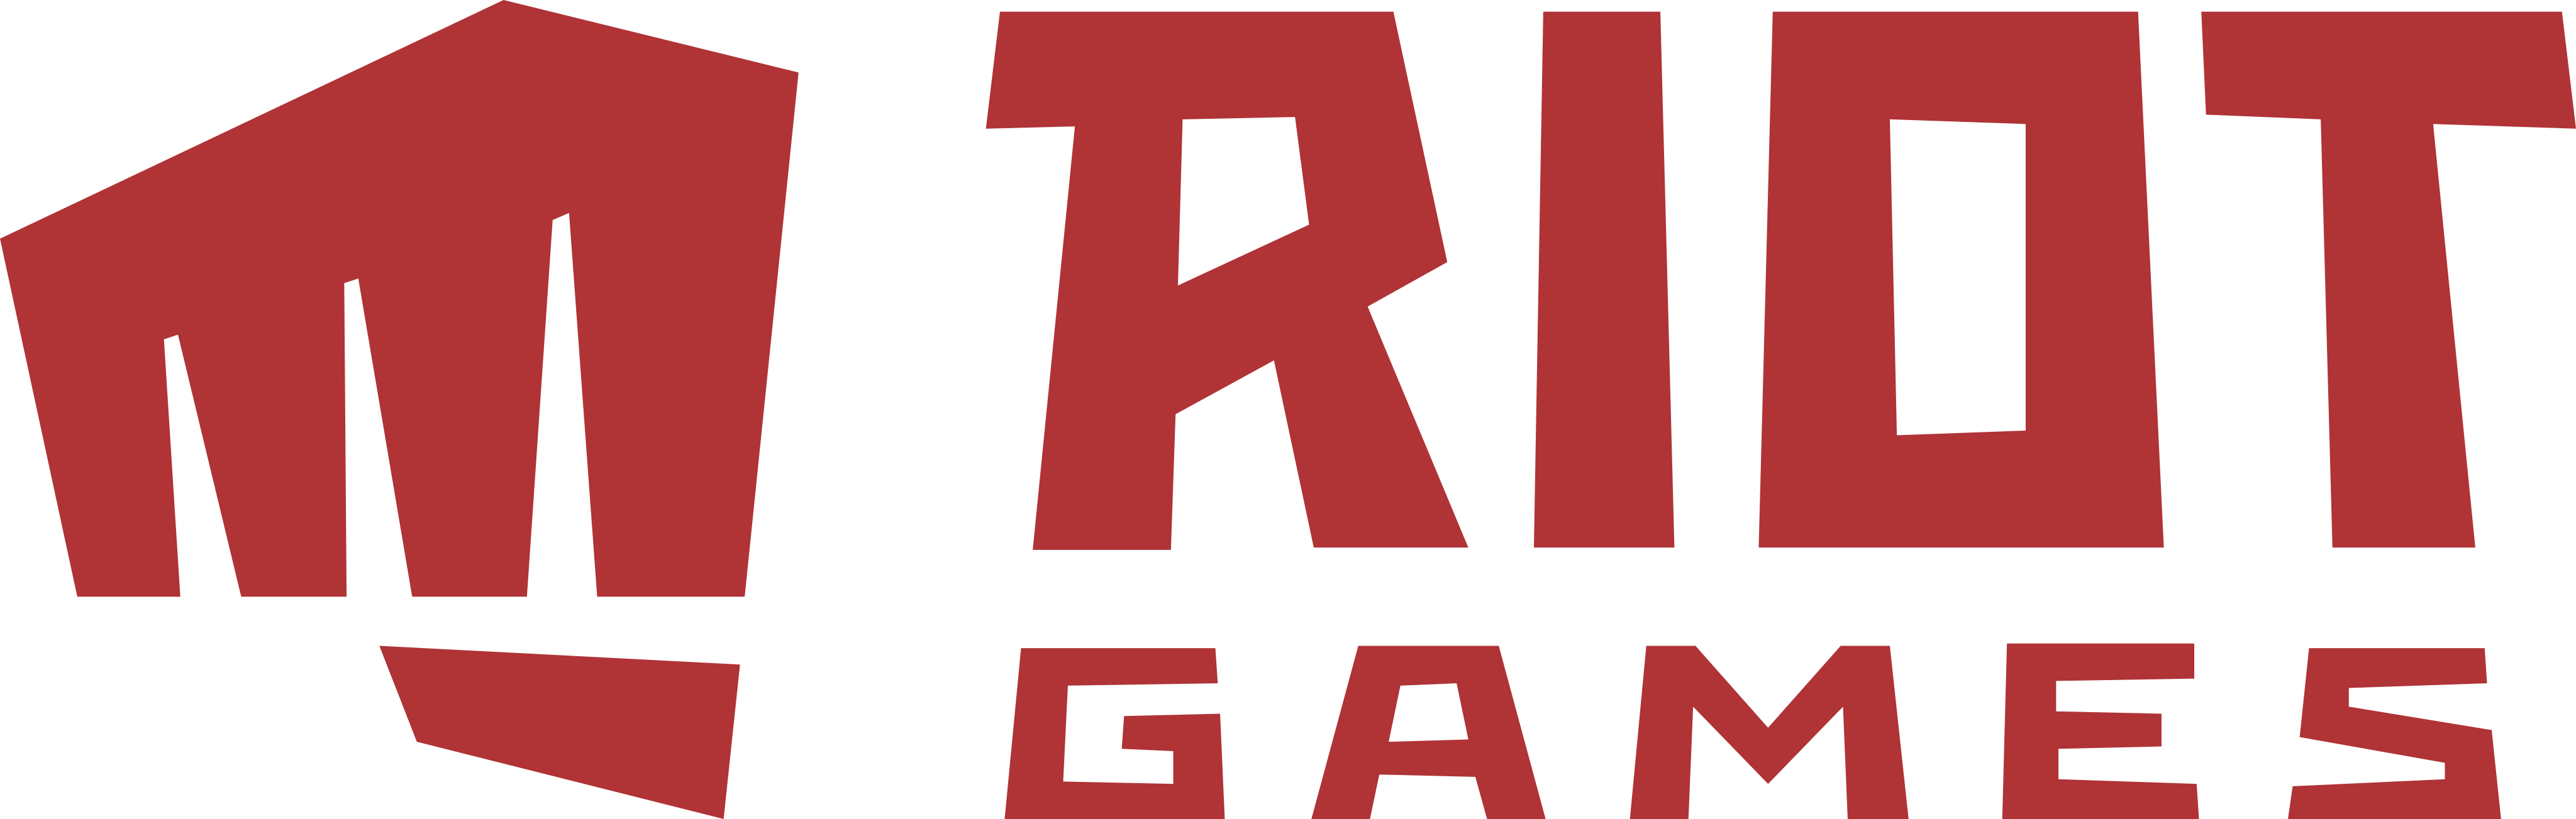 riot-games-logo.png